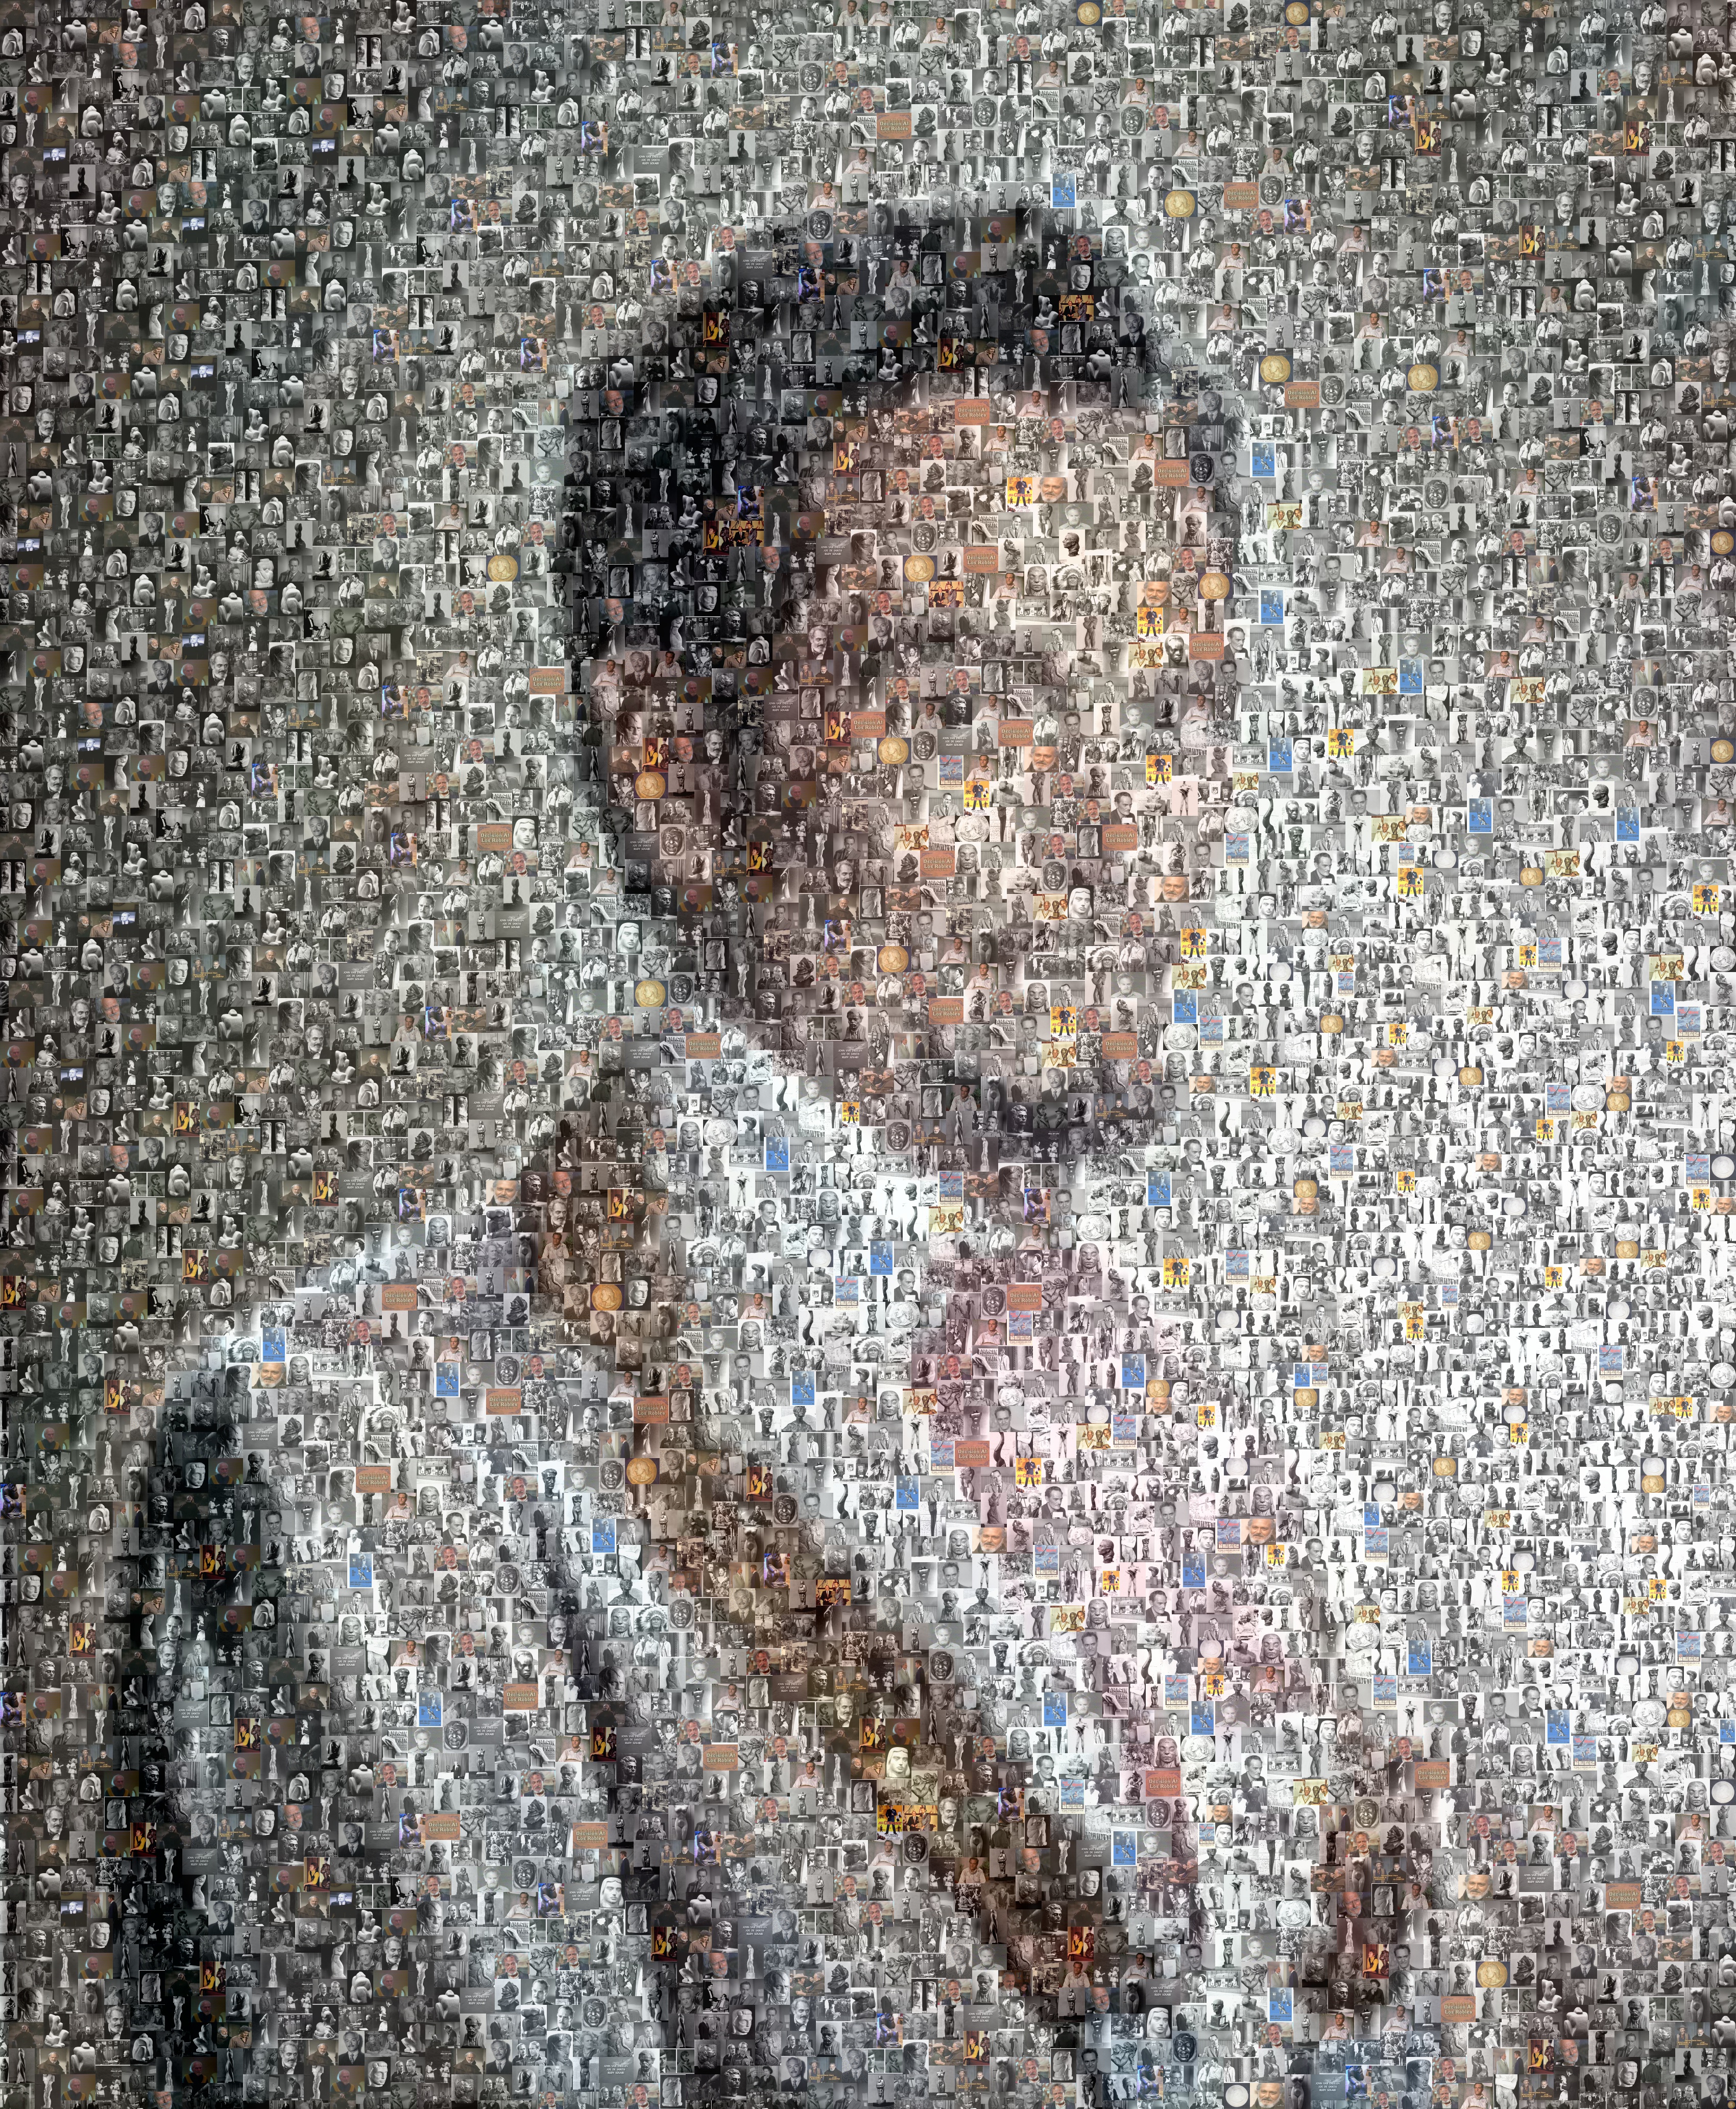 Joe Portrait Prop Mosaic02